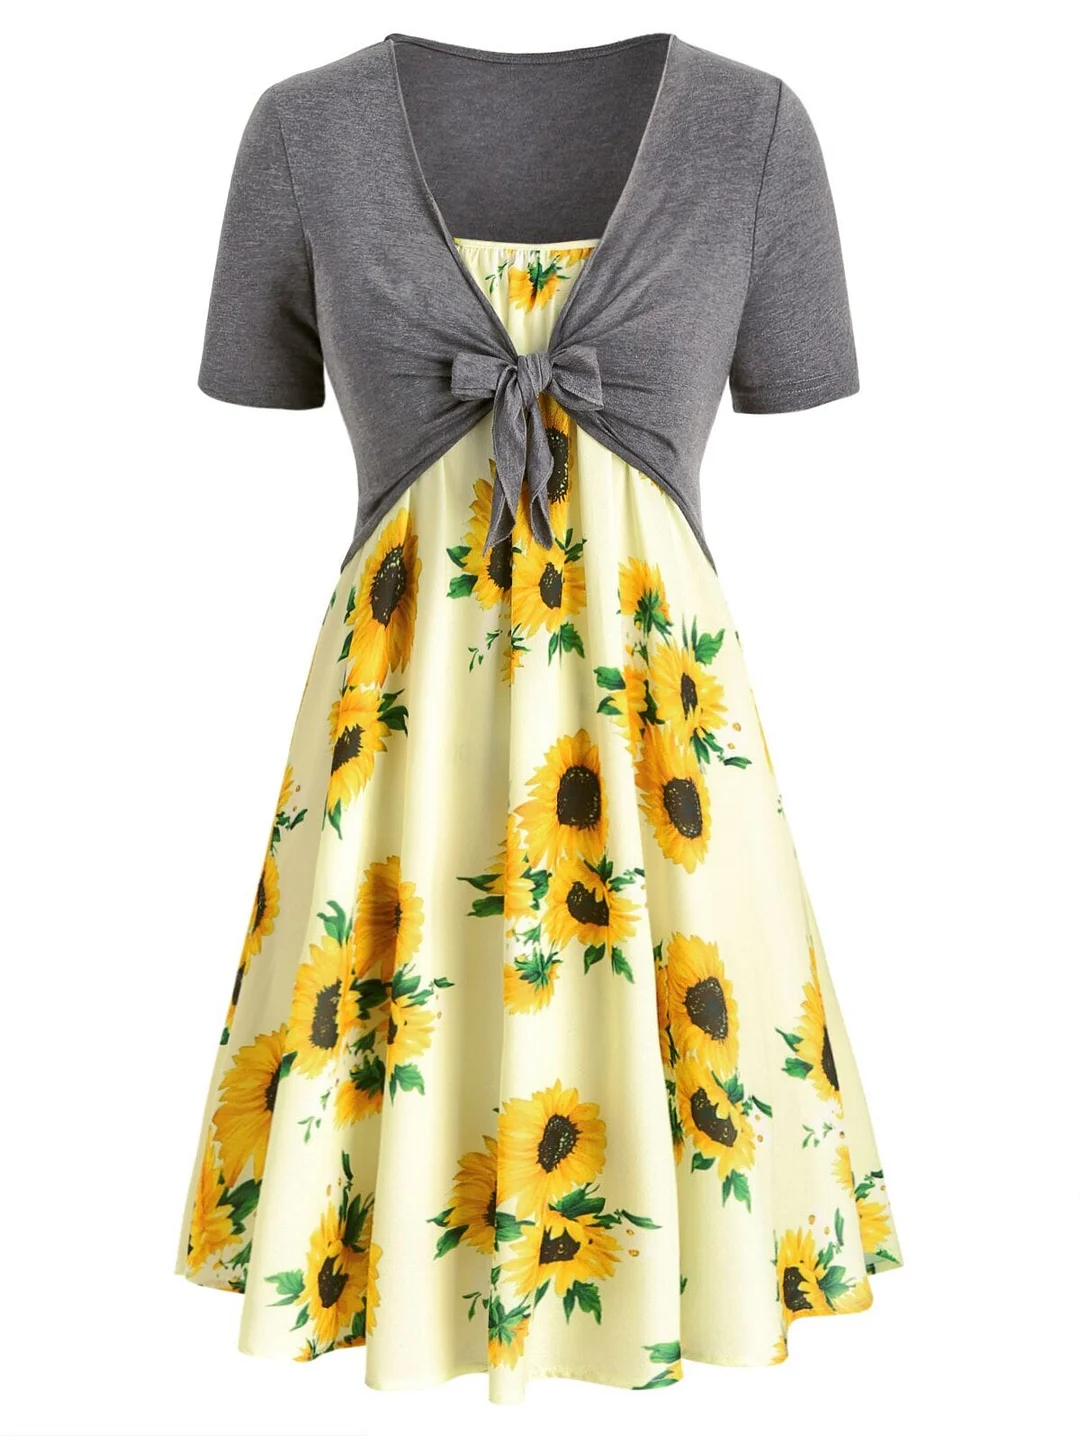 Plus Size Two Piece Women Dress Summer Sunflower Print Dress With Front Knot Top Short Sleeves A-Line Dress Vestidos